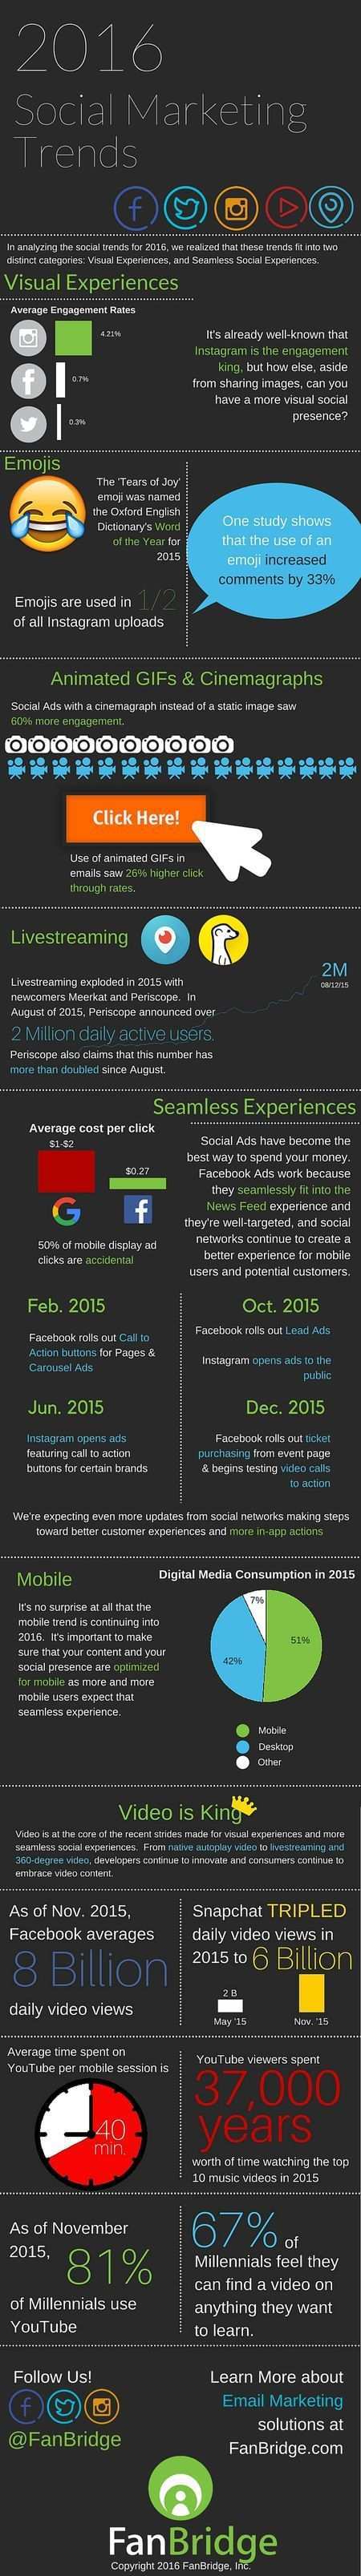 Essential Guide To Social Media Trends 2016 Infographic Social Media Trends Social Media Infographic Marketing Strategy Social Media